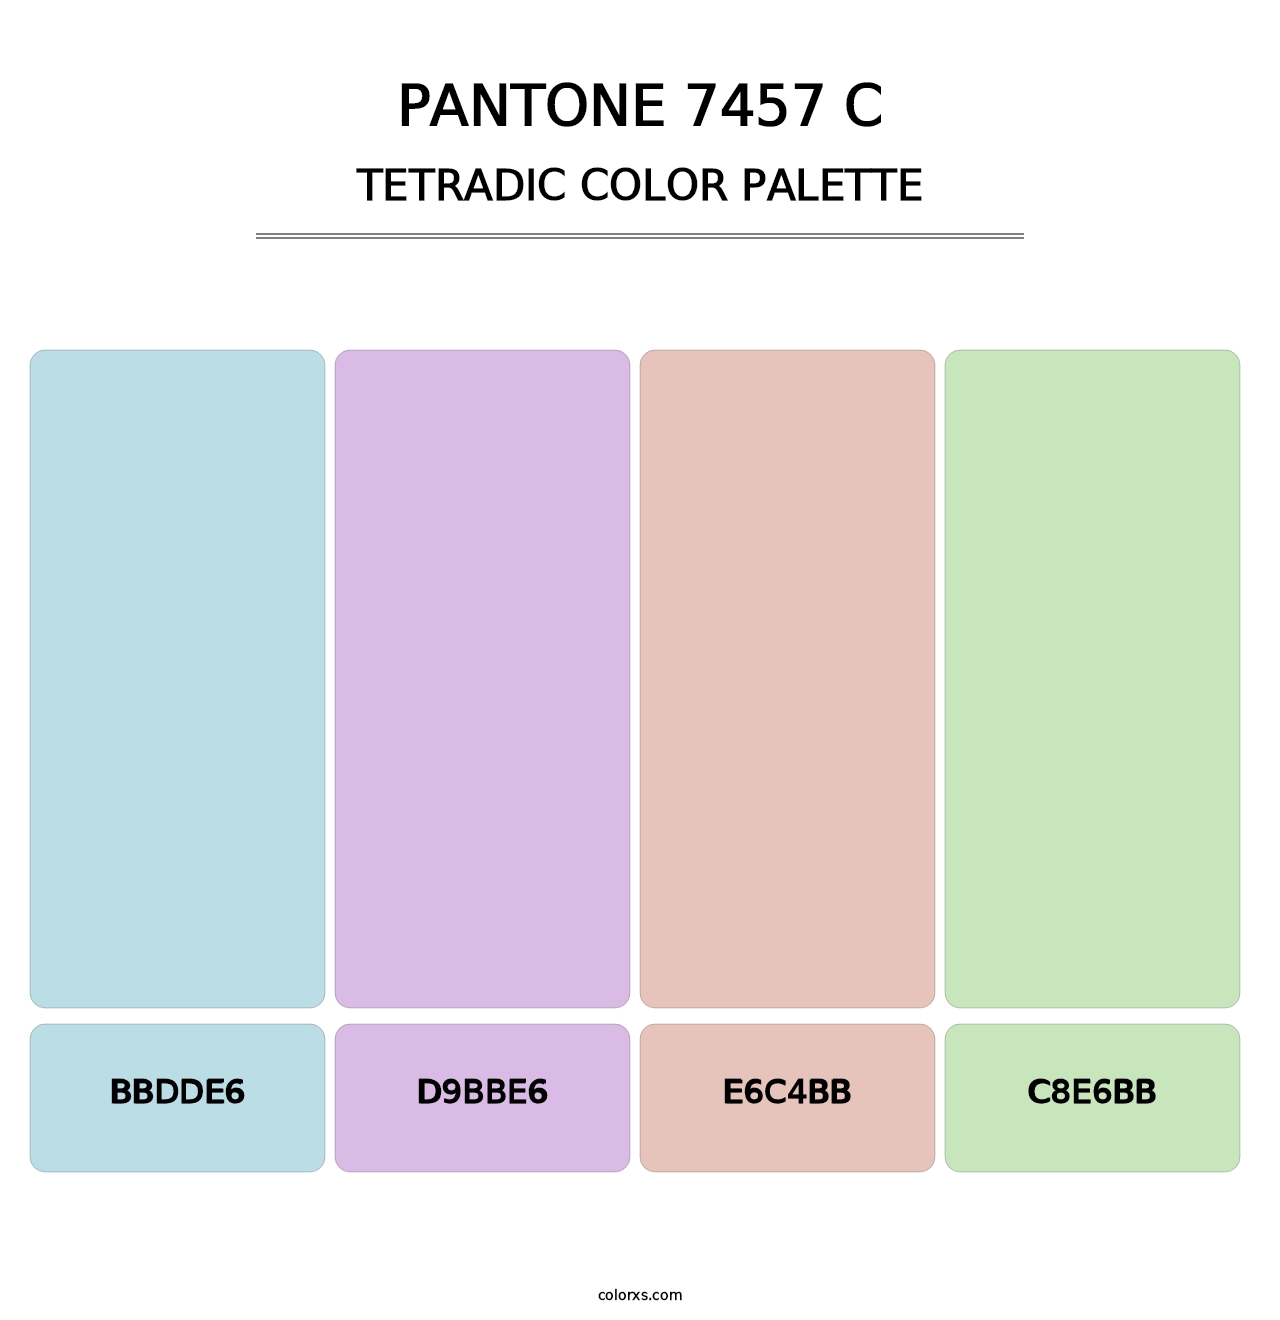 PANTONE 7457 C - Tetradic Color Palette